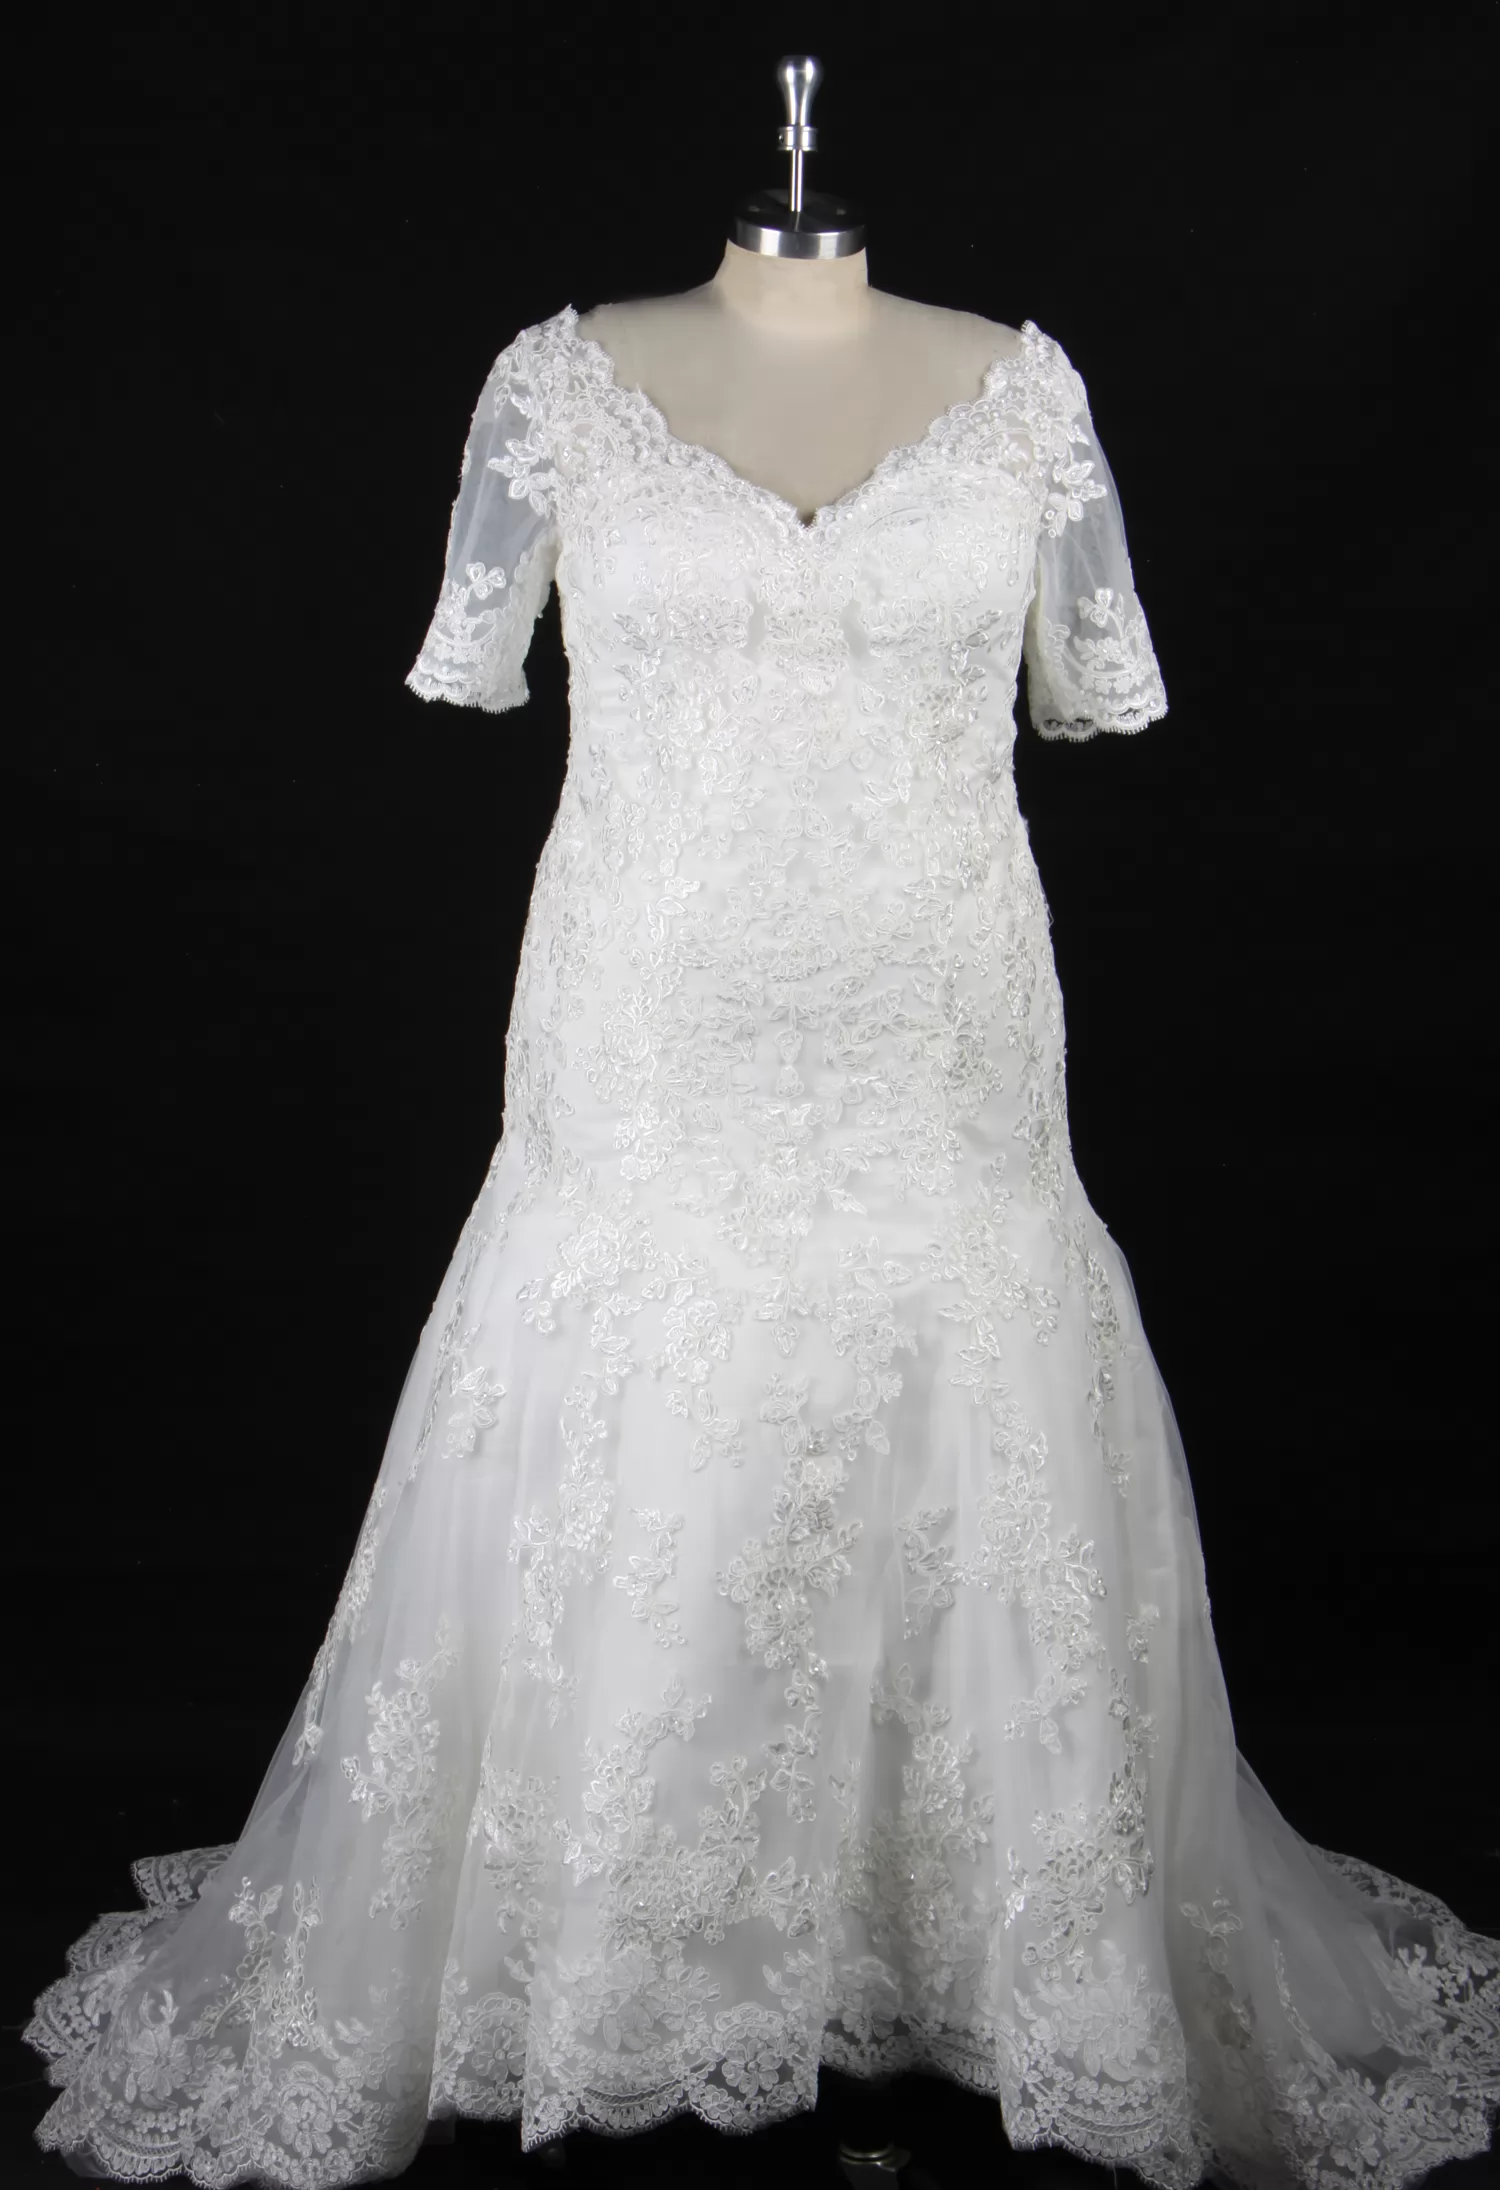 Plus Size Sheath With Delicate Lace Motifs Wedding Dress